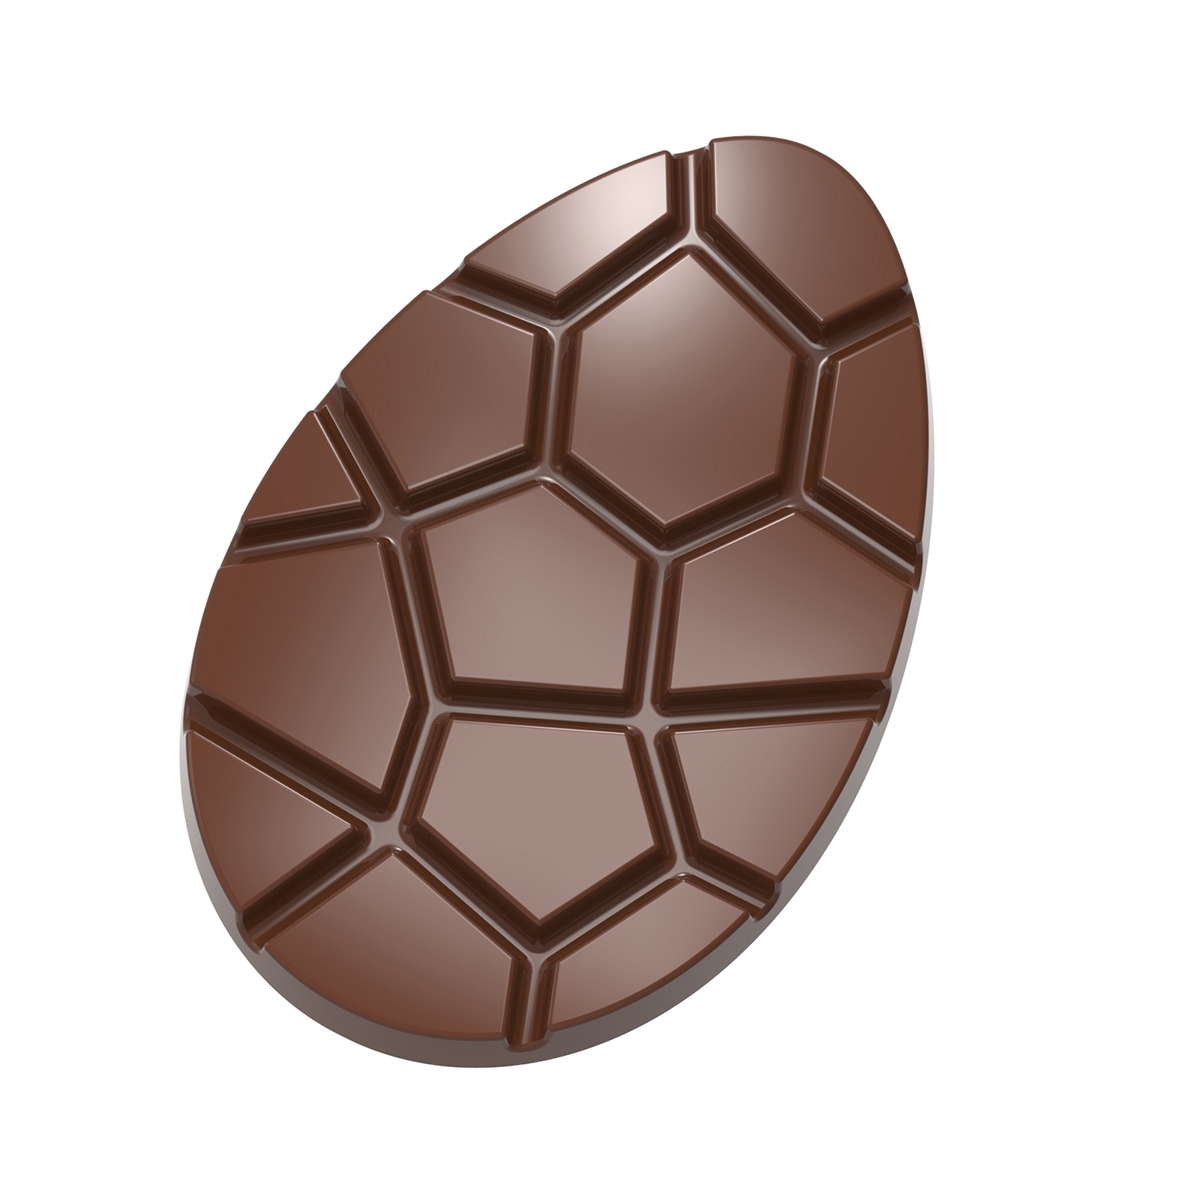 Форма для шоколада «Яйцо» поликарбонатная CW12028, 2 ячейки, Chocolate World, Бельгия  | Фото — Магазин Andy Chef  1